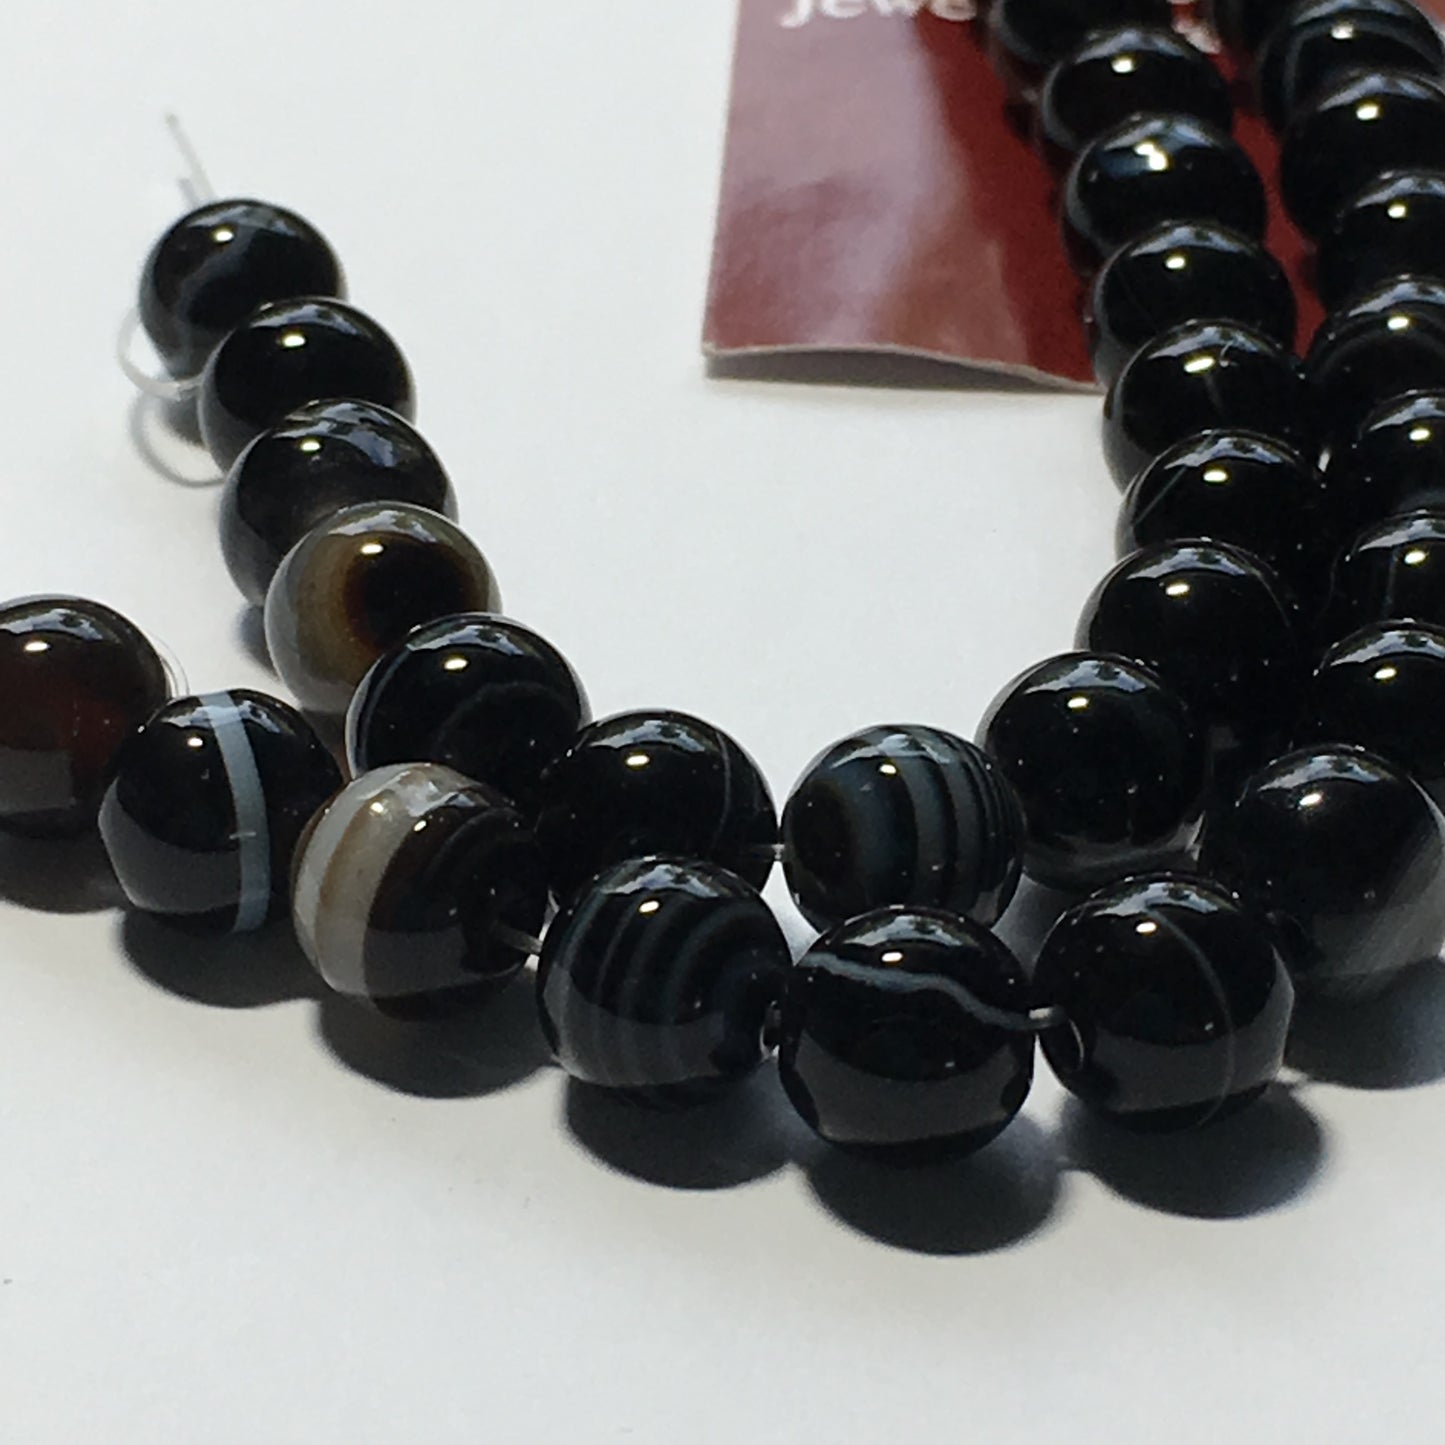 Bead Gallery Black Onyx Semi-Precious Stone Round Beads, 6 mm -  34 Beads